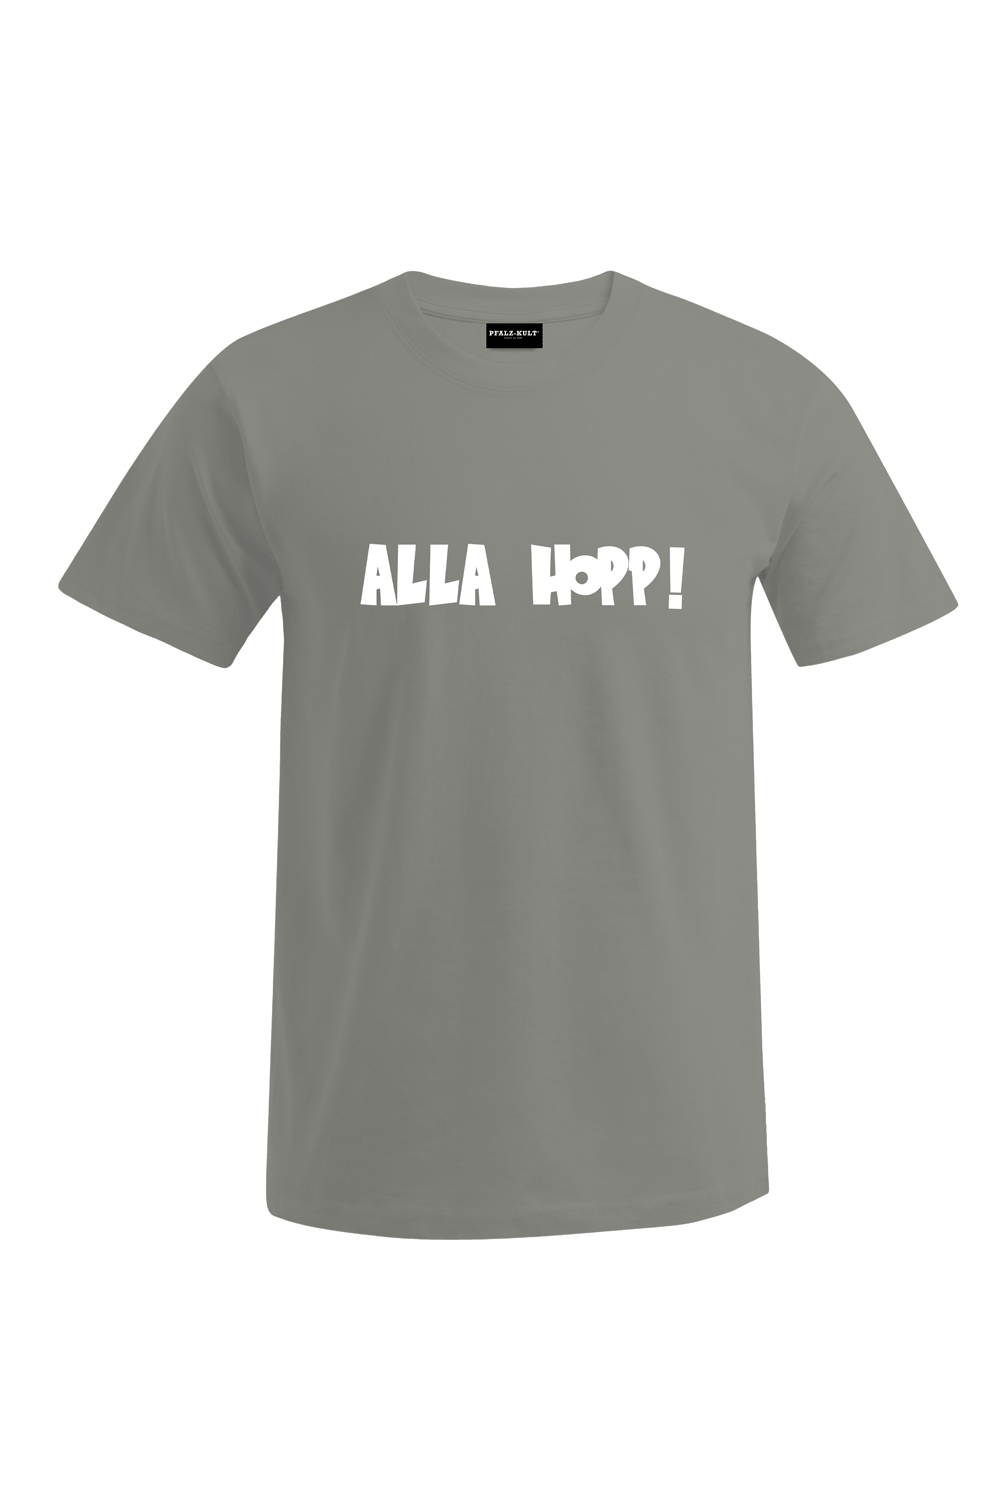 Alla Hopp - Männer T-Shirt - Unisex